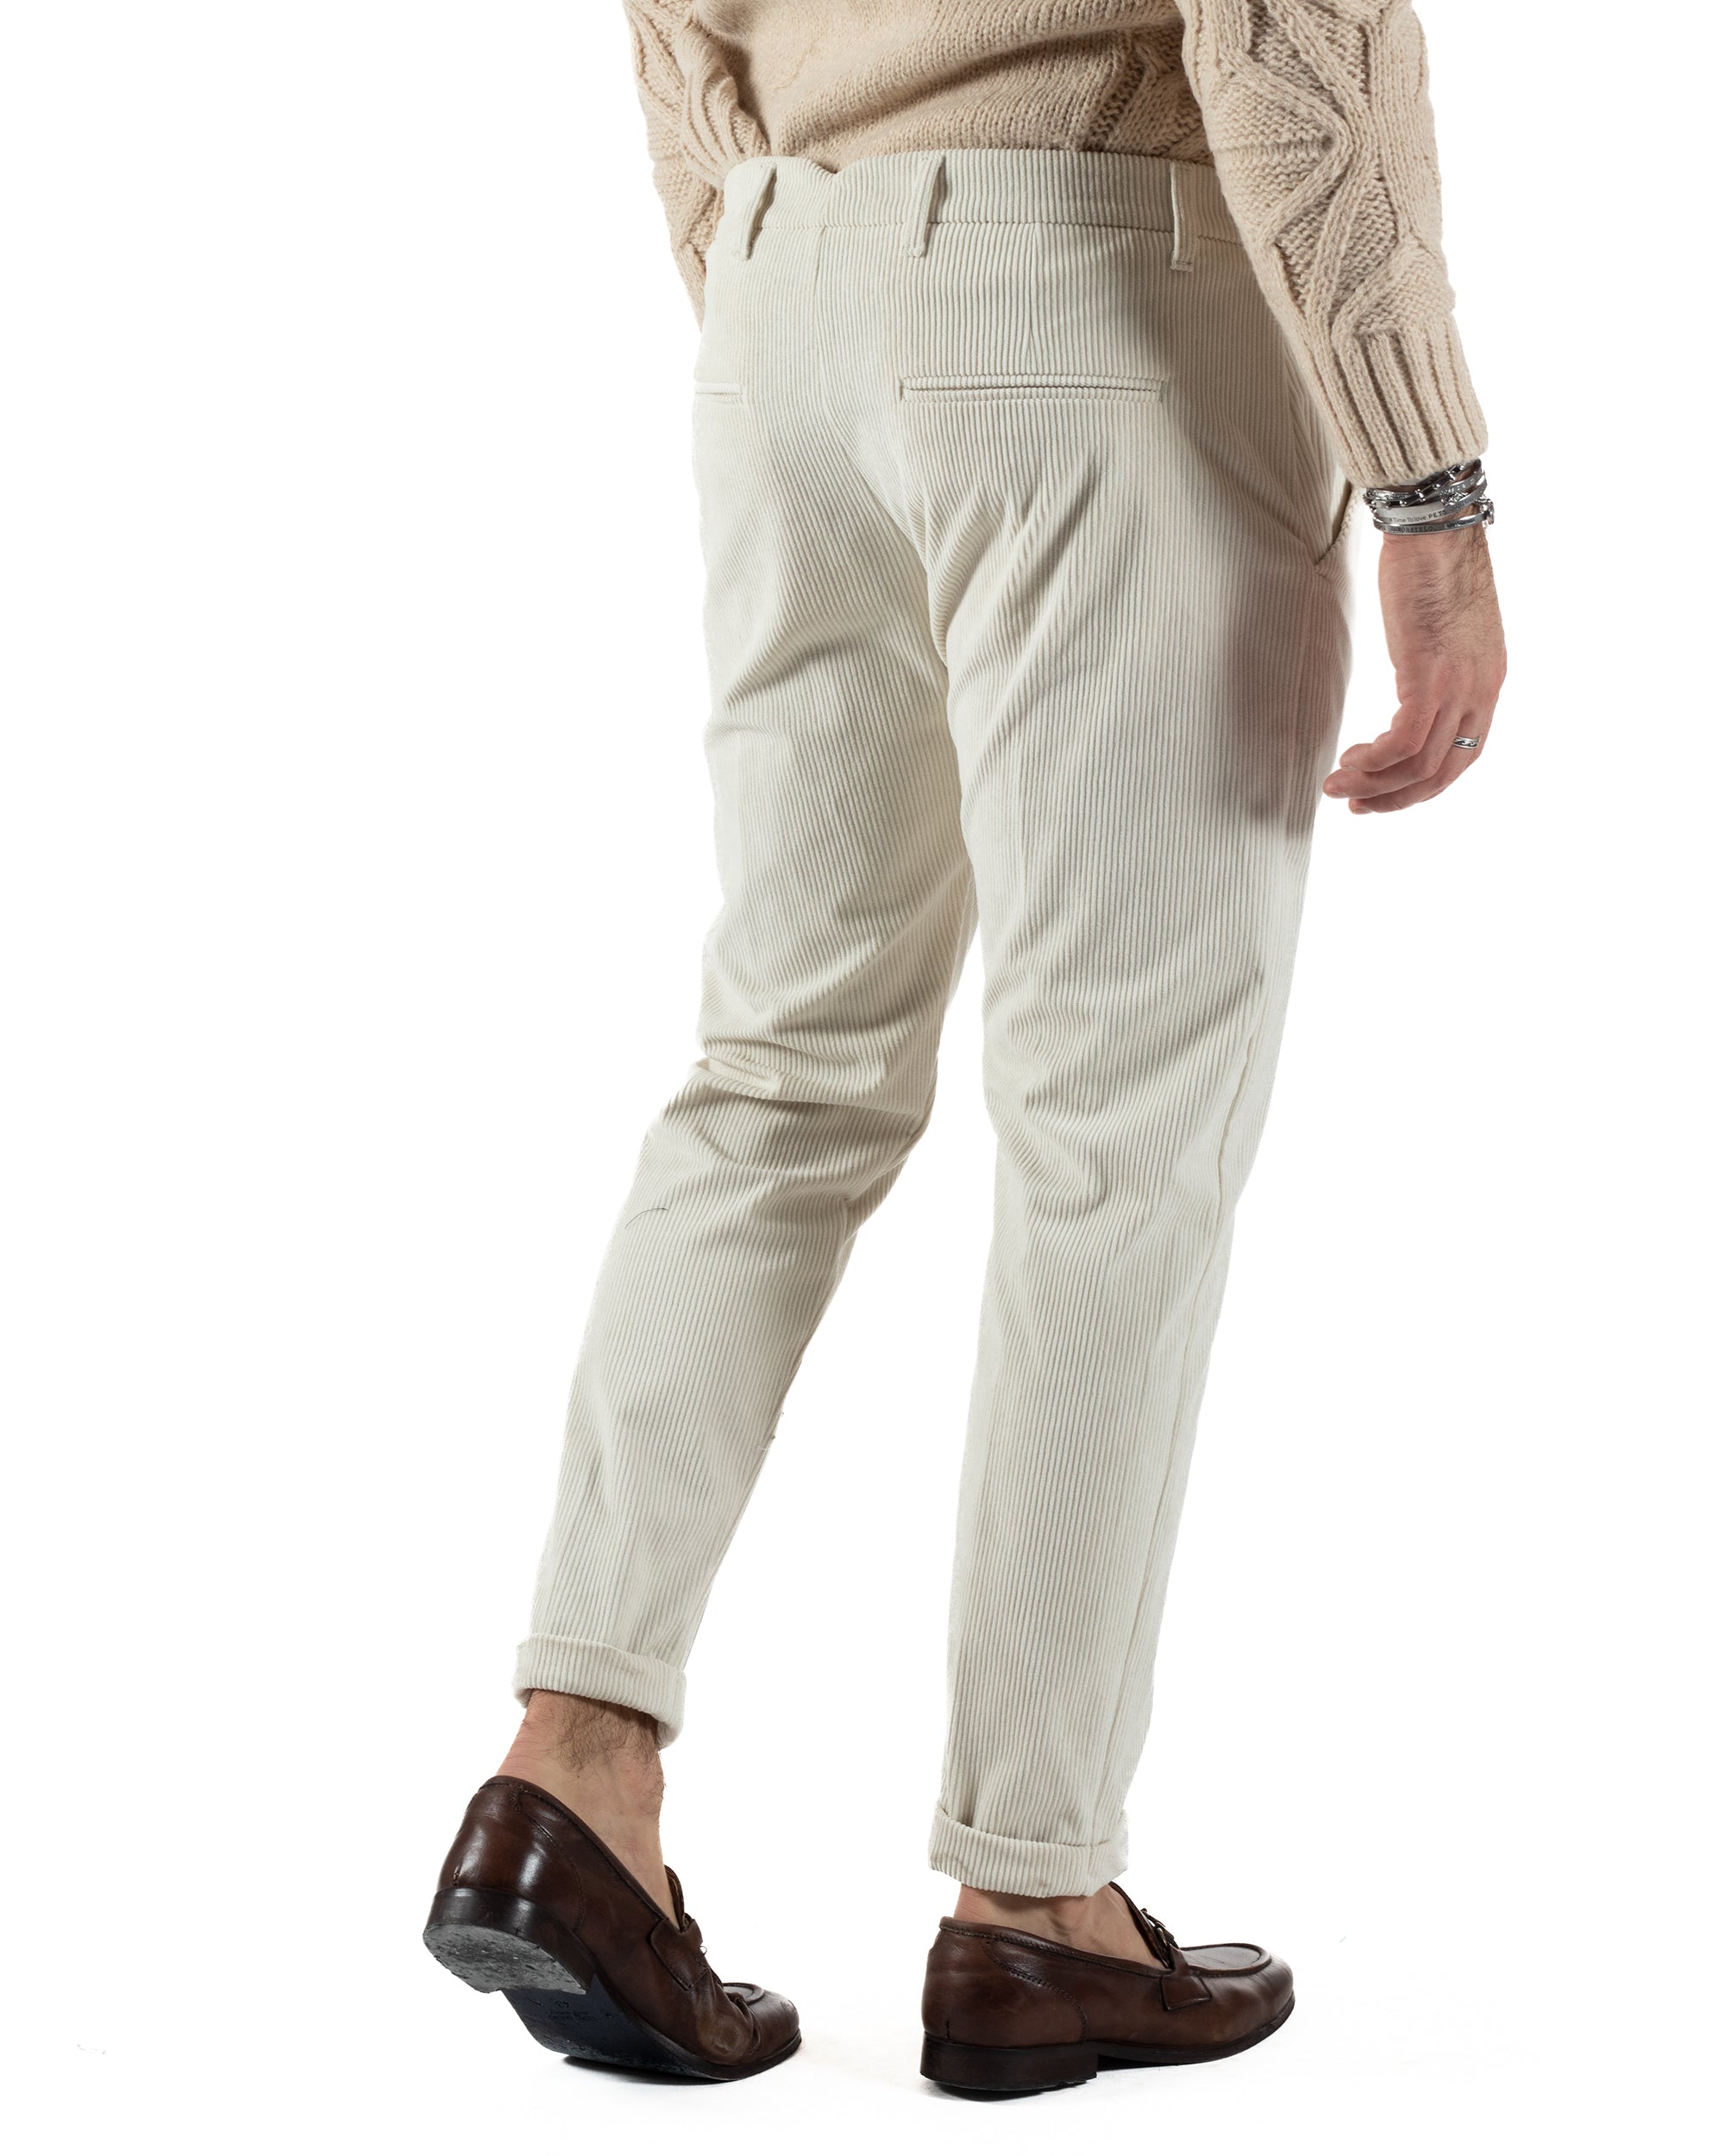 Pantaloni Uomo Tasca America Classico Velluto Costine Panna Casual GIOSAL-P6005A